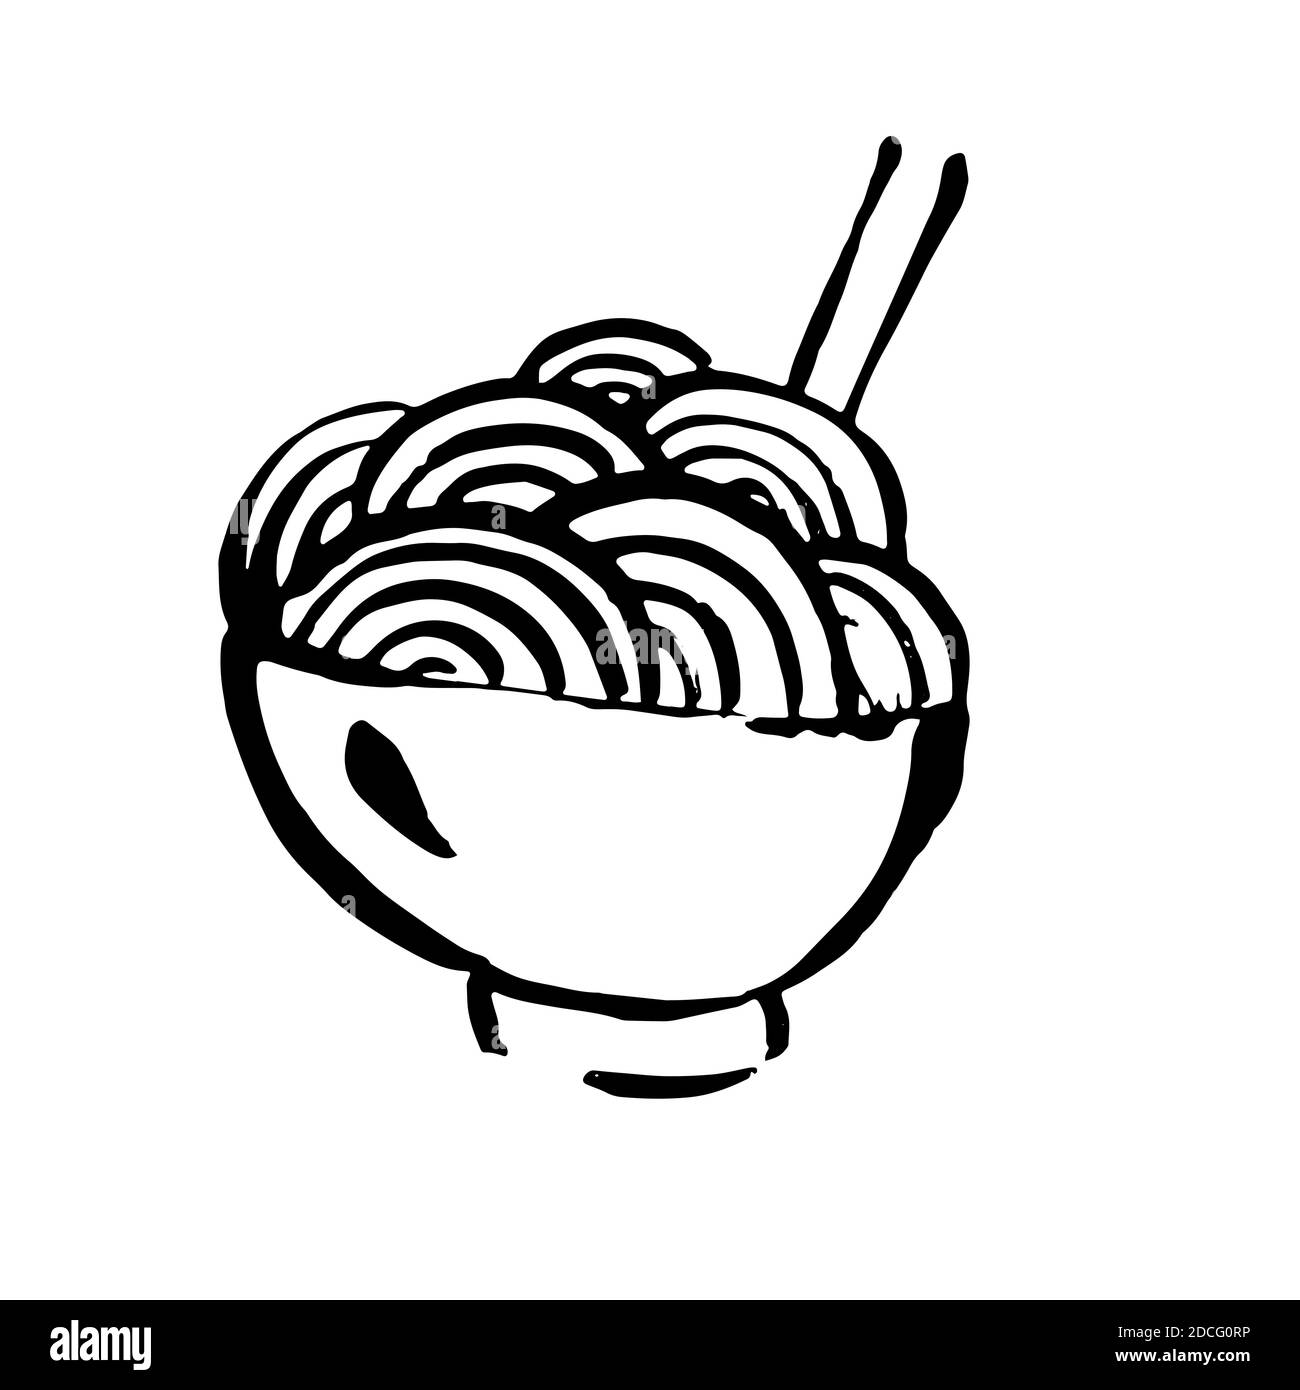 Noodles icon. Ink brush vector illustration. Food flat illustration Stock Vector